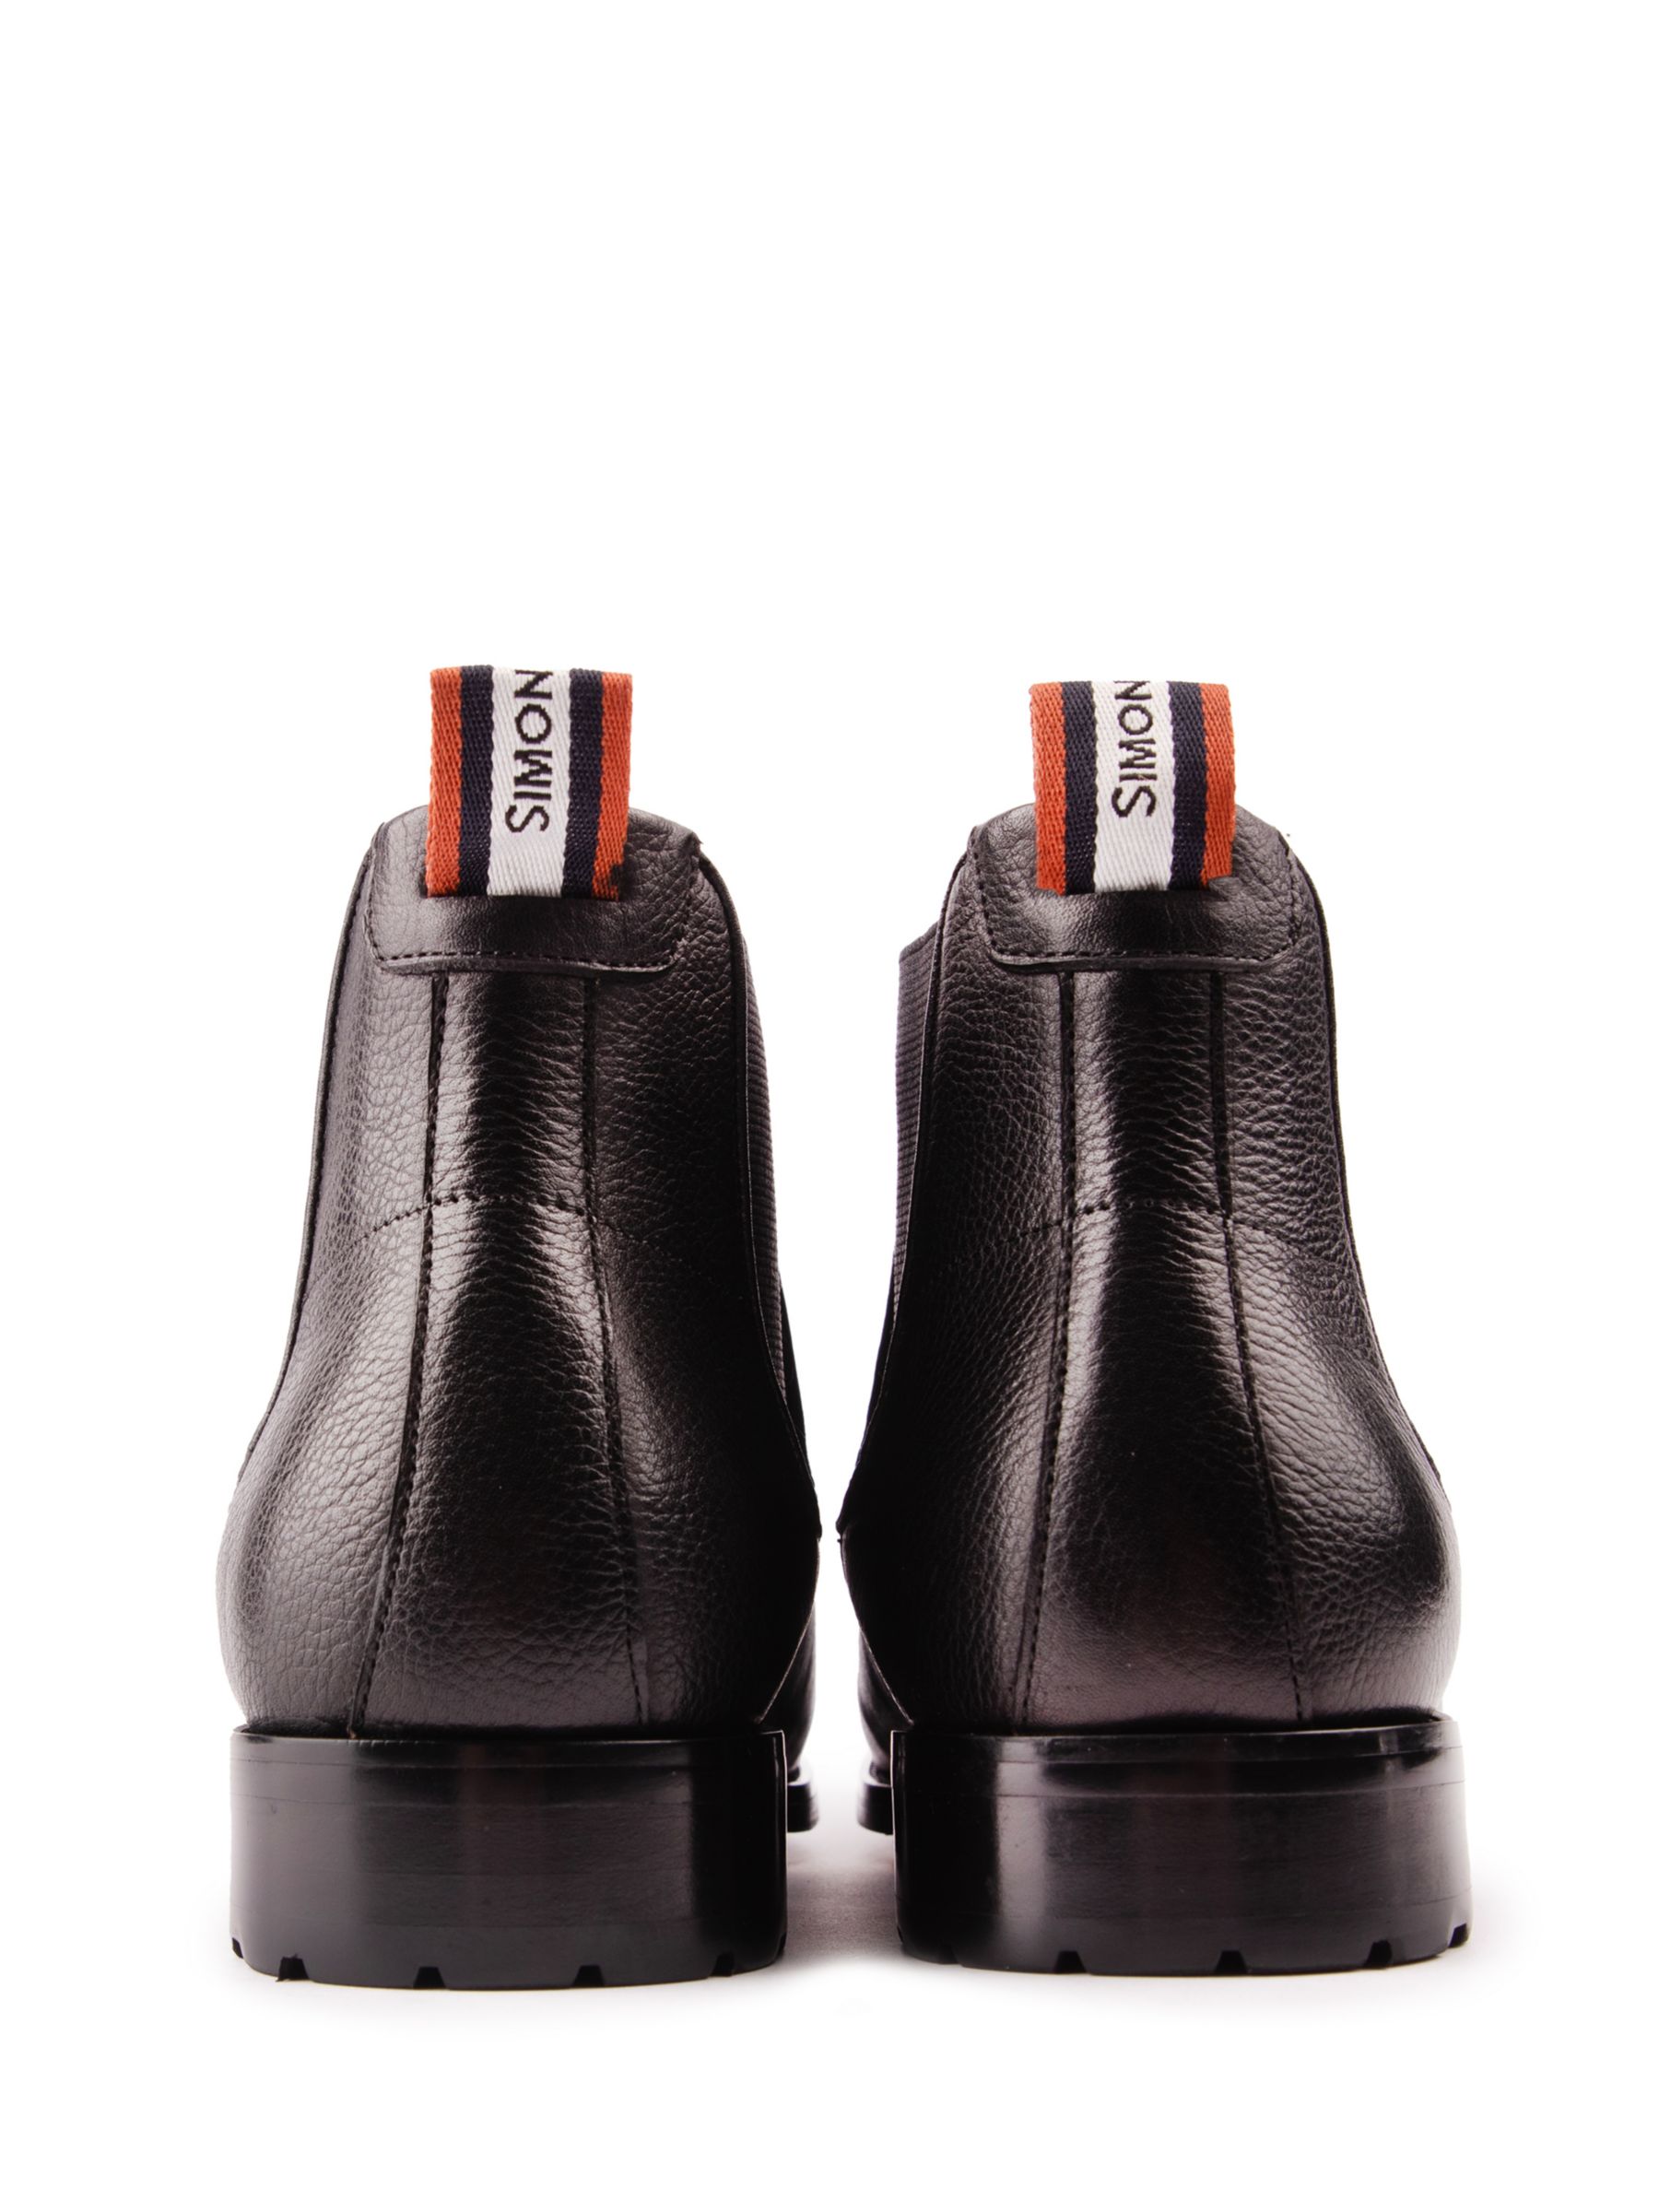 Simon Carter Clover Leather Chelsea Boots, Black, 7